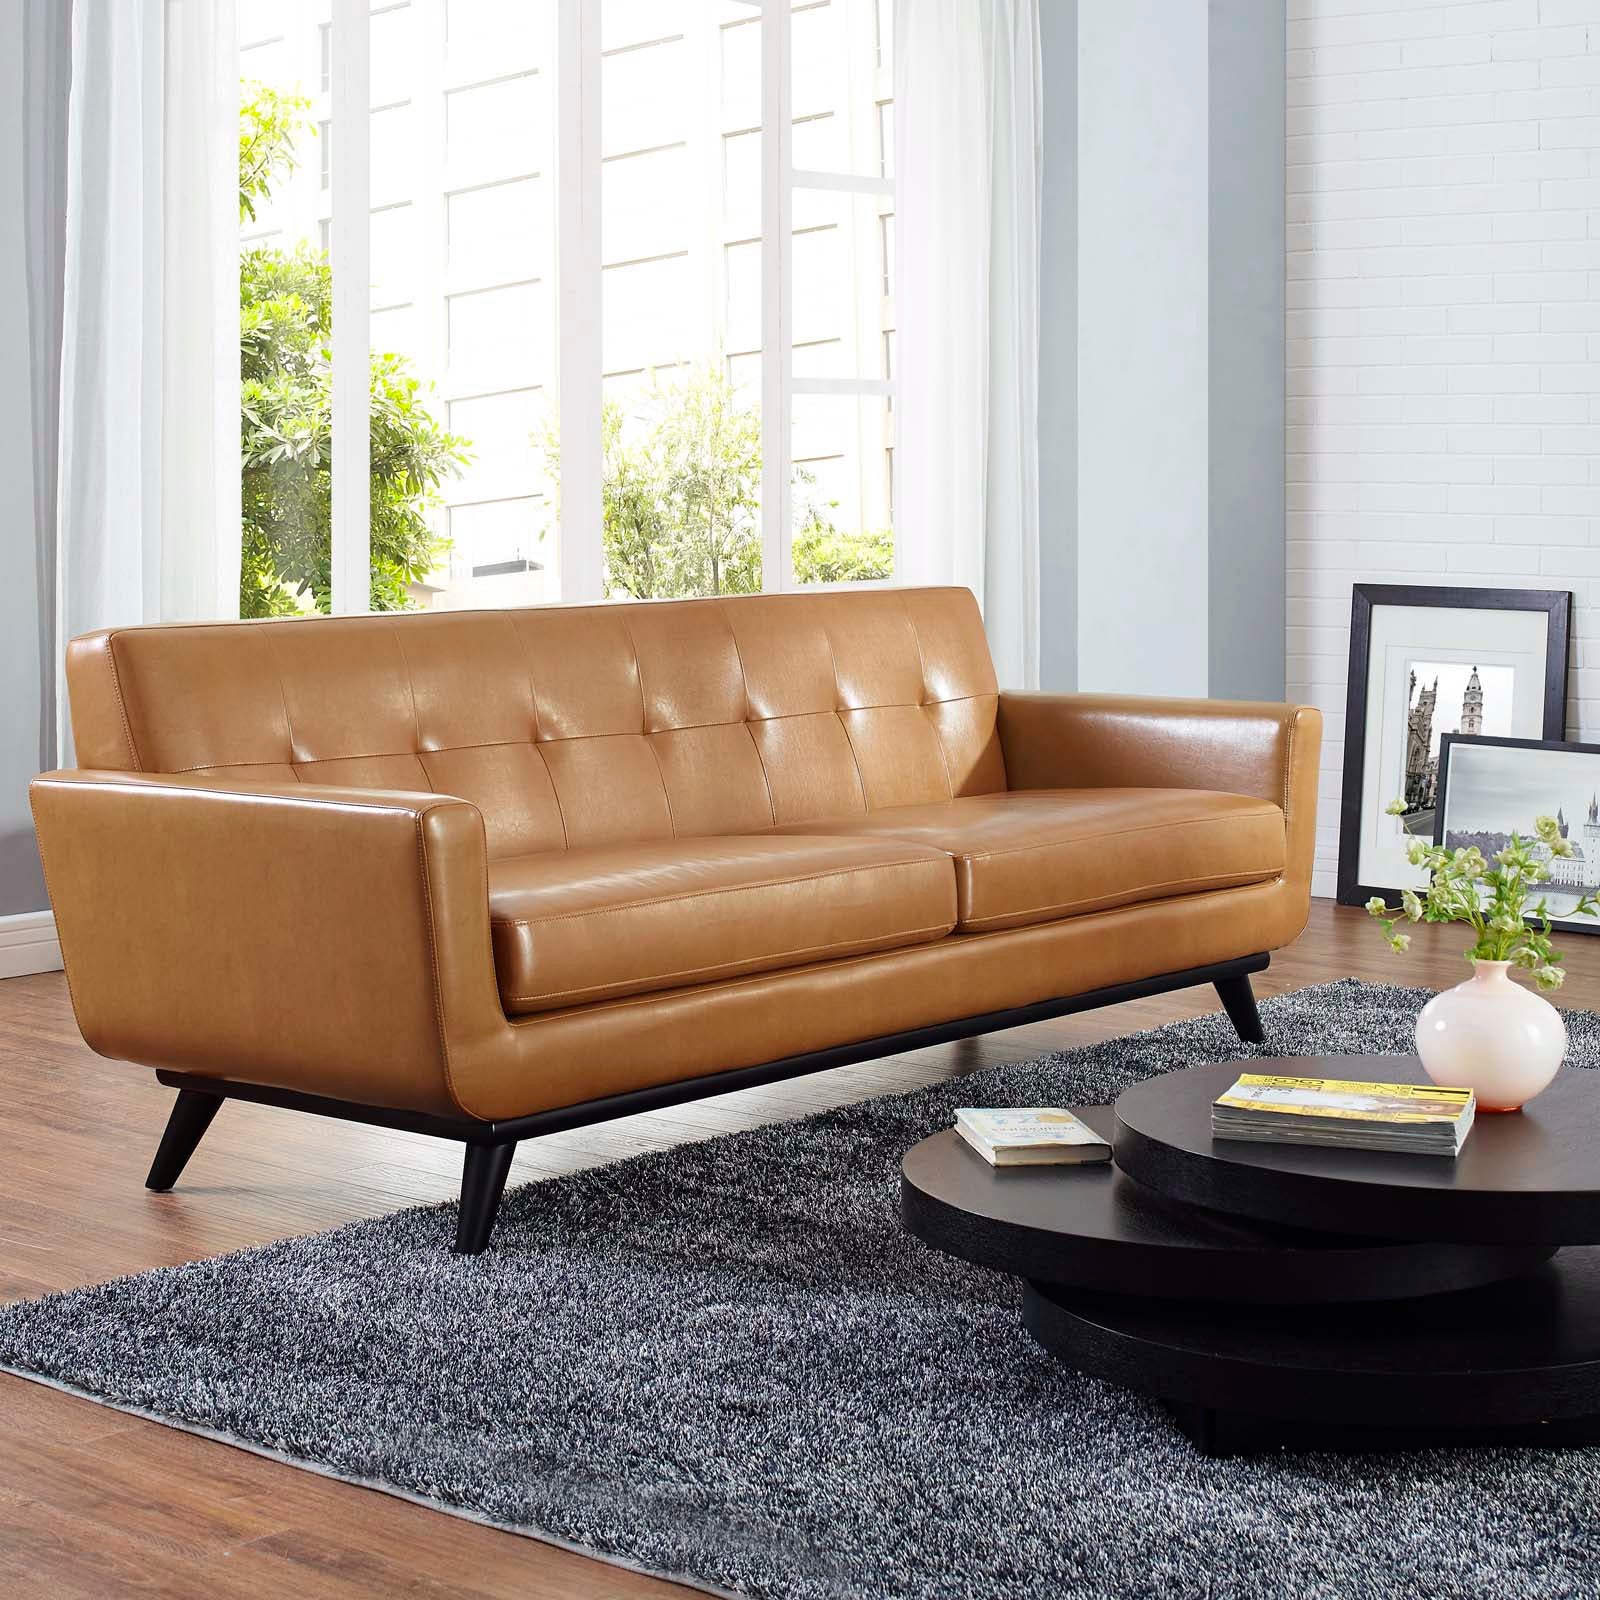 Engage Bonded Leather Sofa - East Shore Modern Home Furnishings